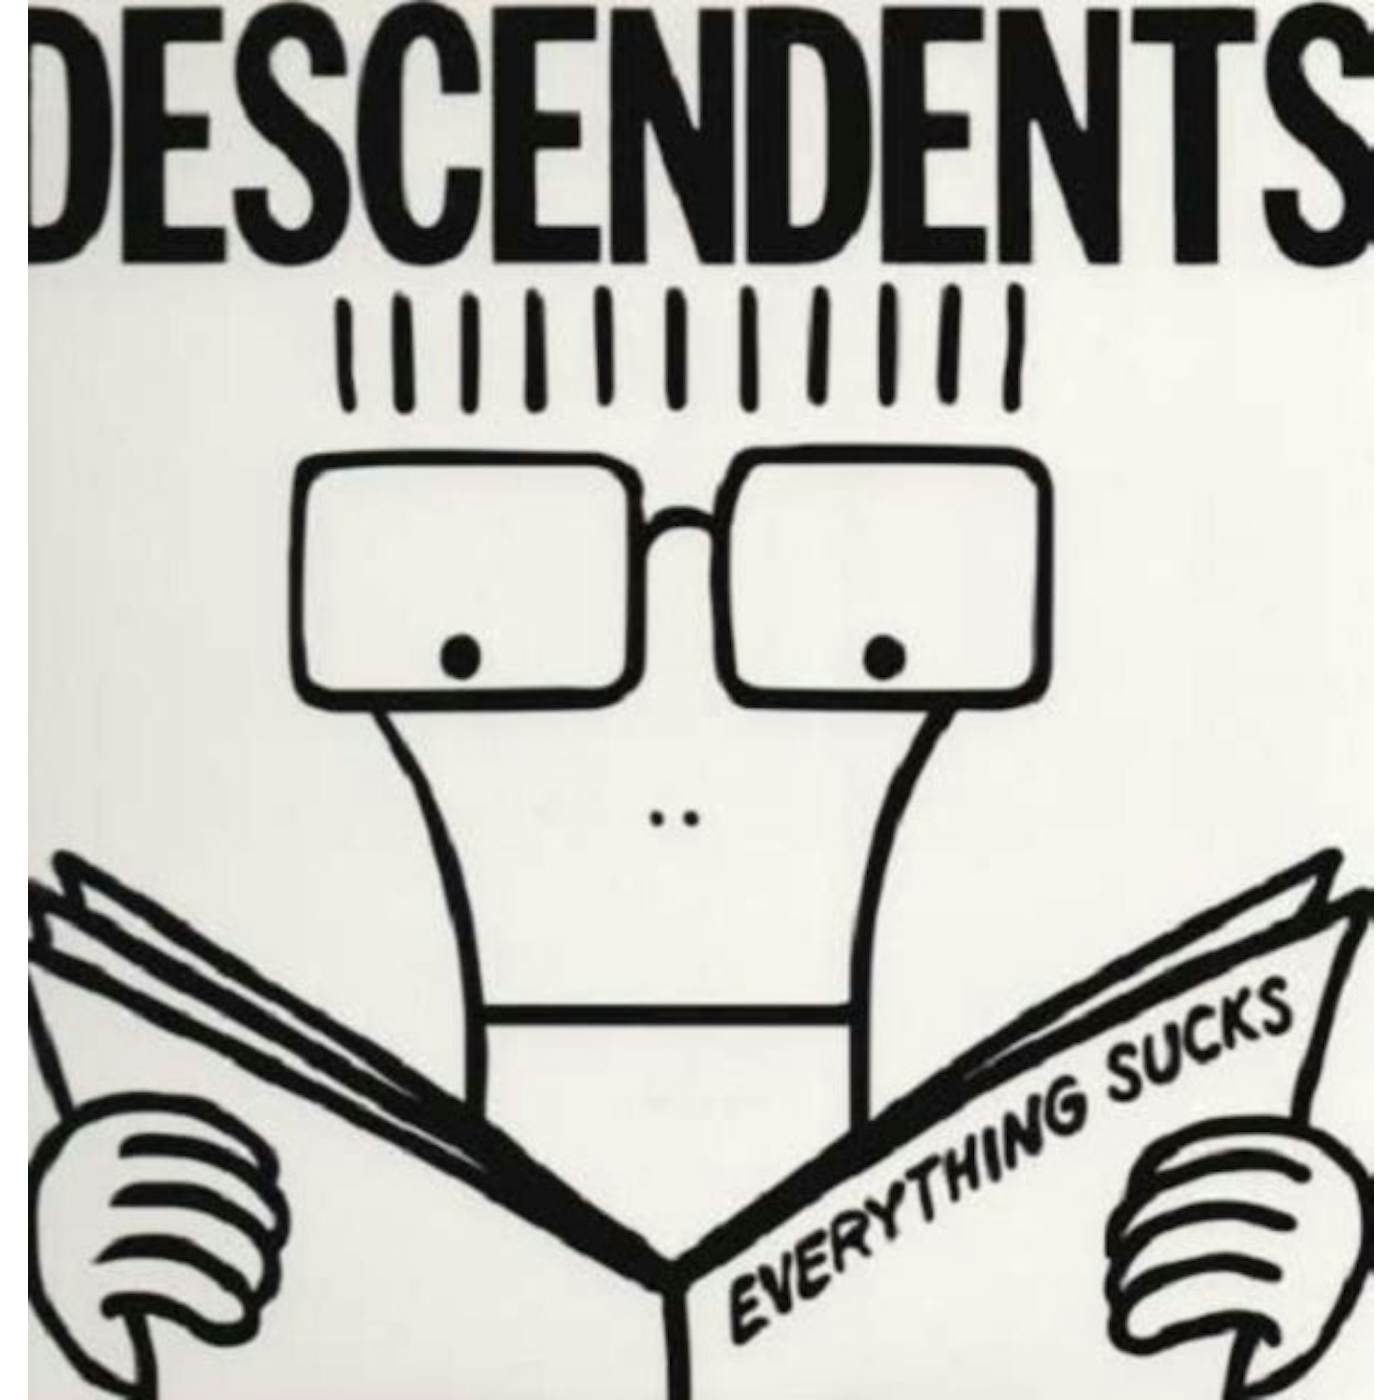 Descendents LP Vinyl Record - Everything Sucks